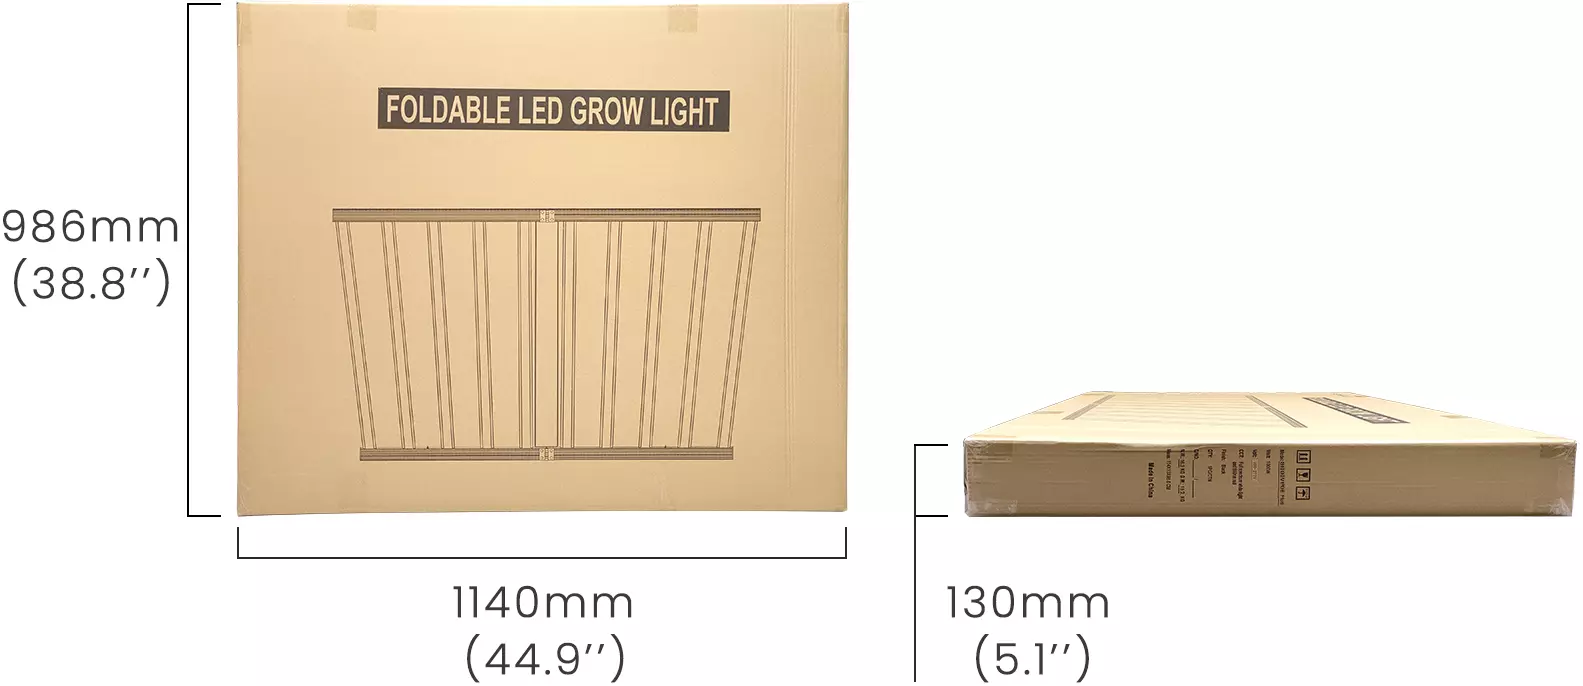 G1000V1P06 Plus Grow Light packing information